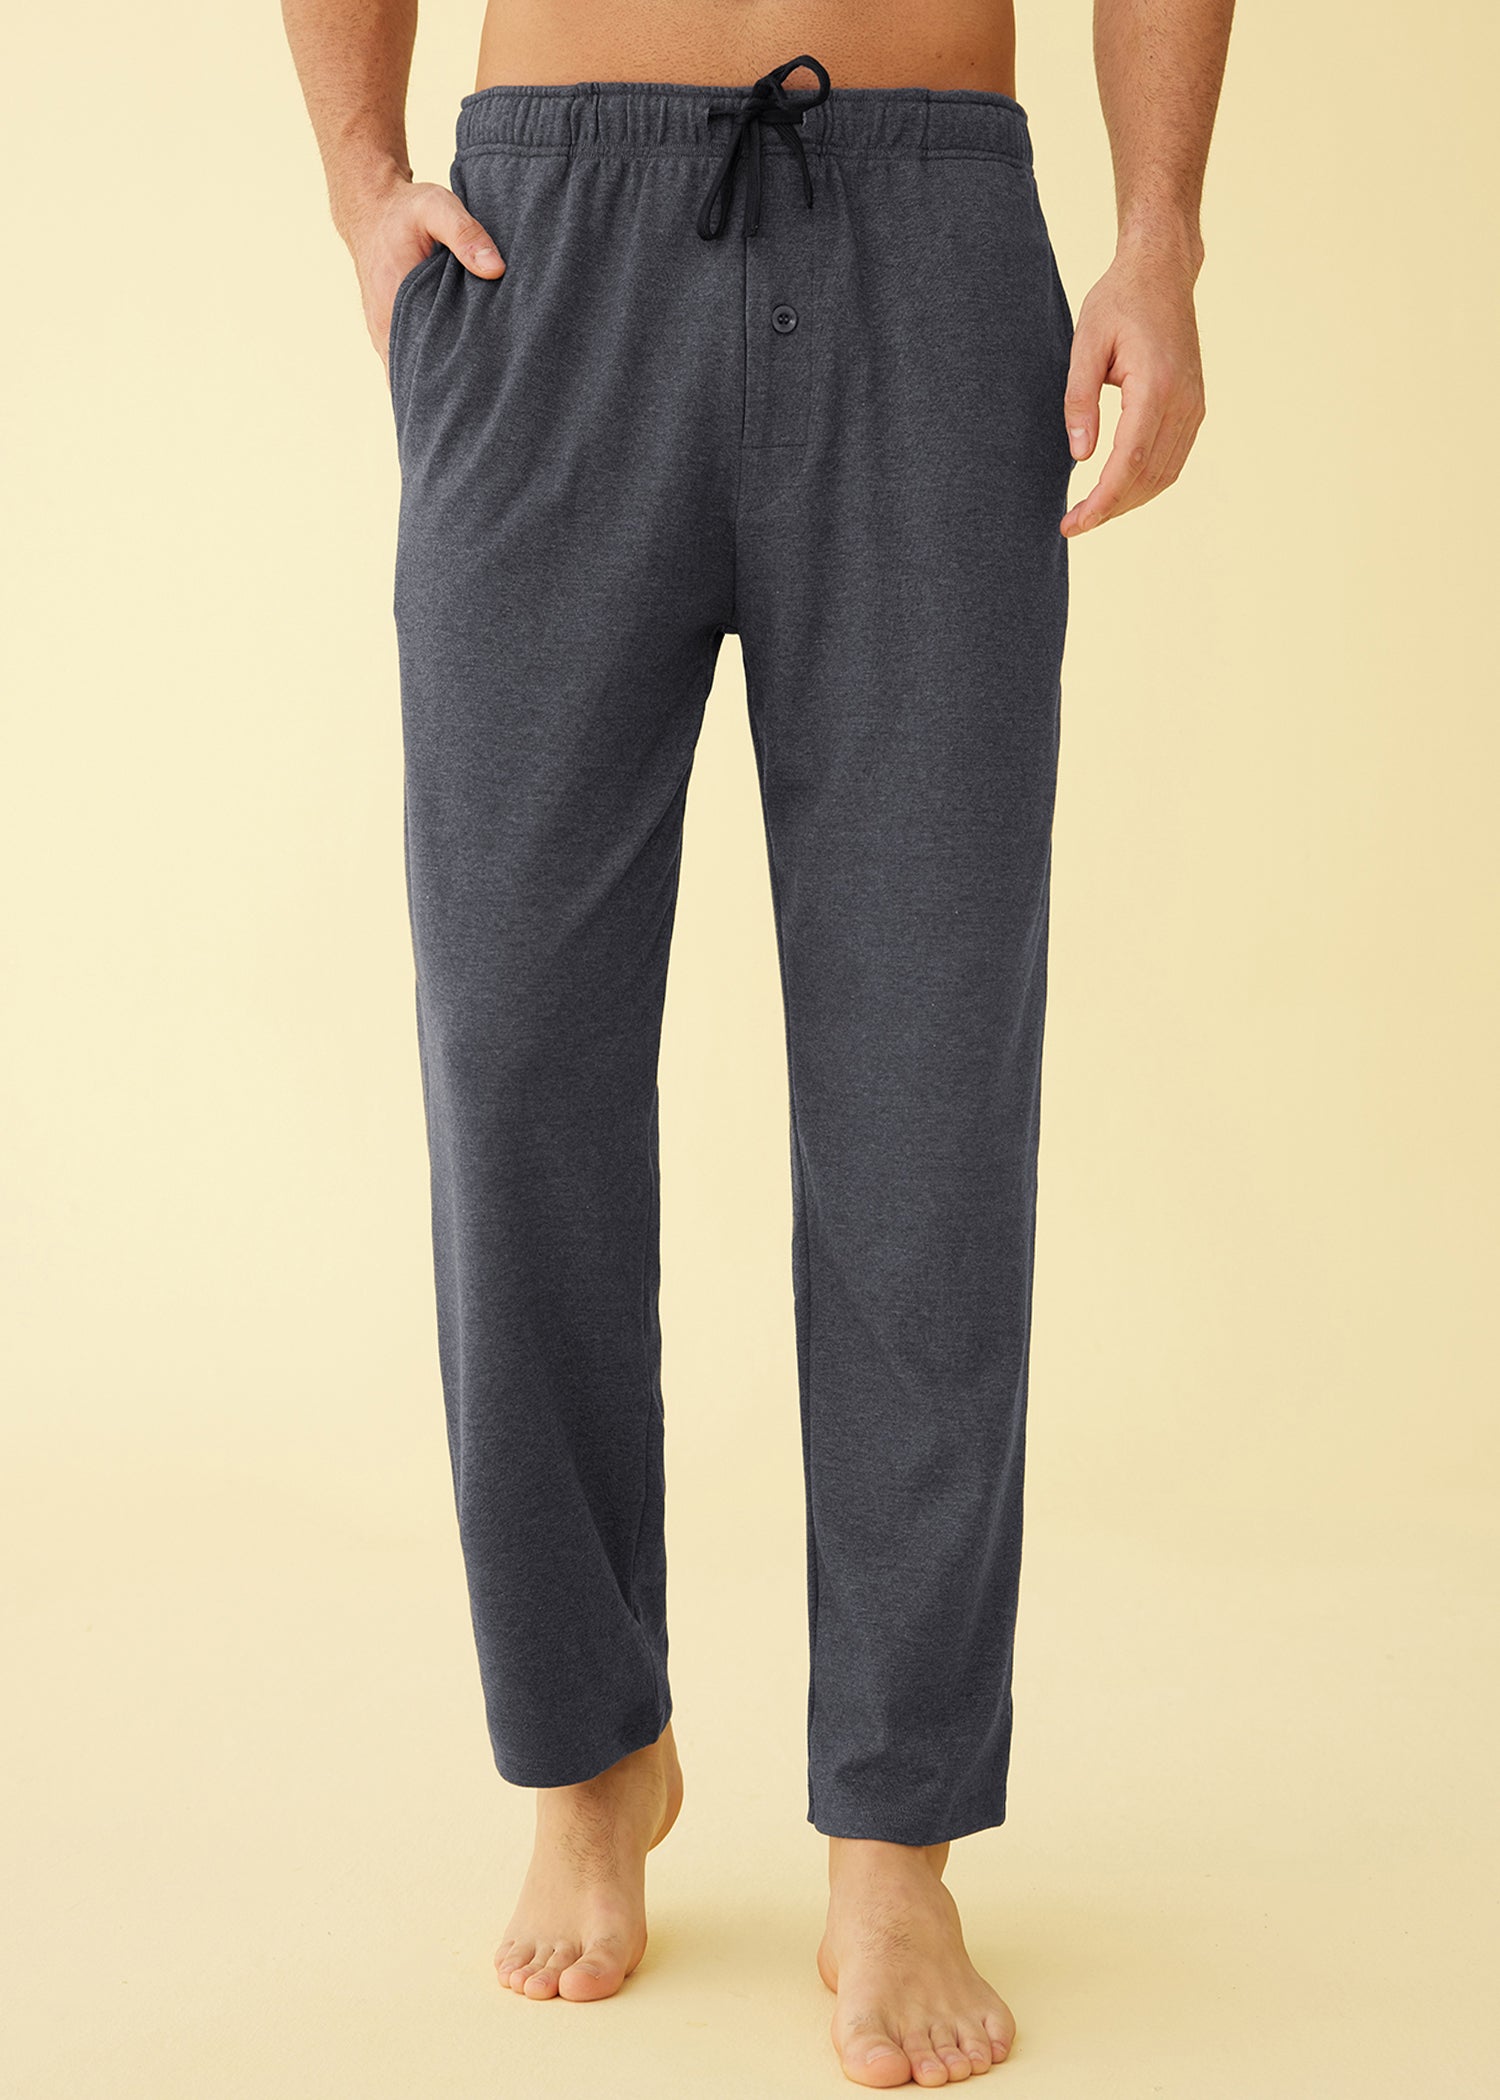 Mens Cotton Pajama Pants, Lightweight Lounge Pant with Pockets Soft  Sleepwear for Men - Walmart.com